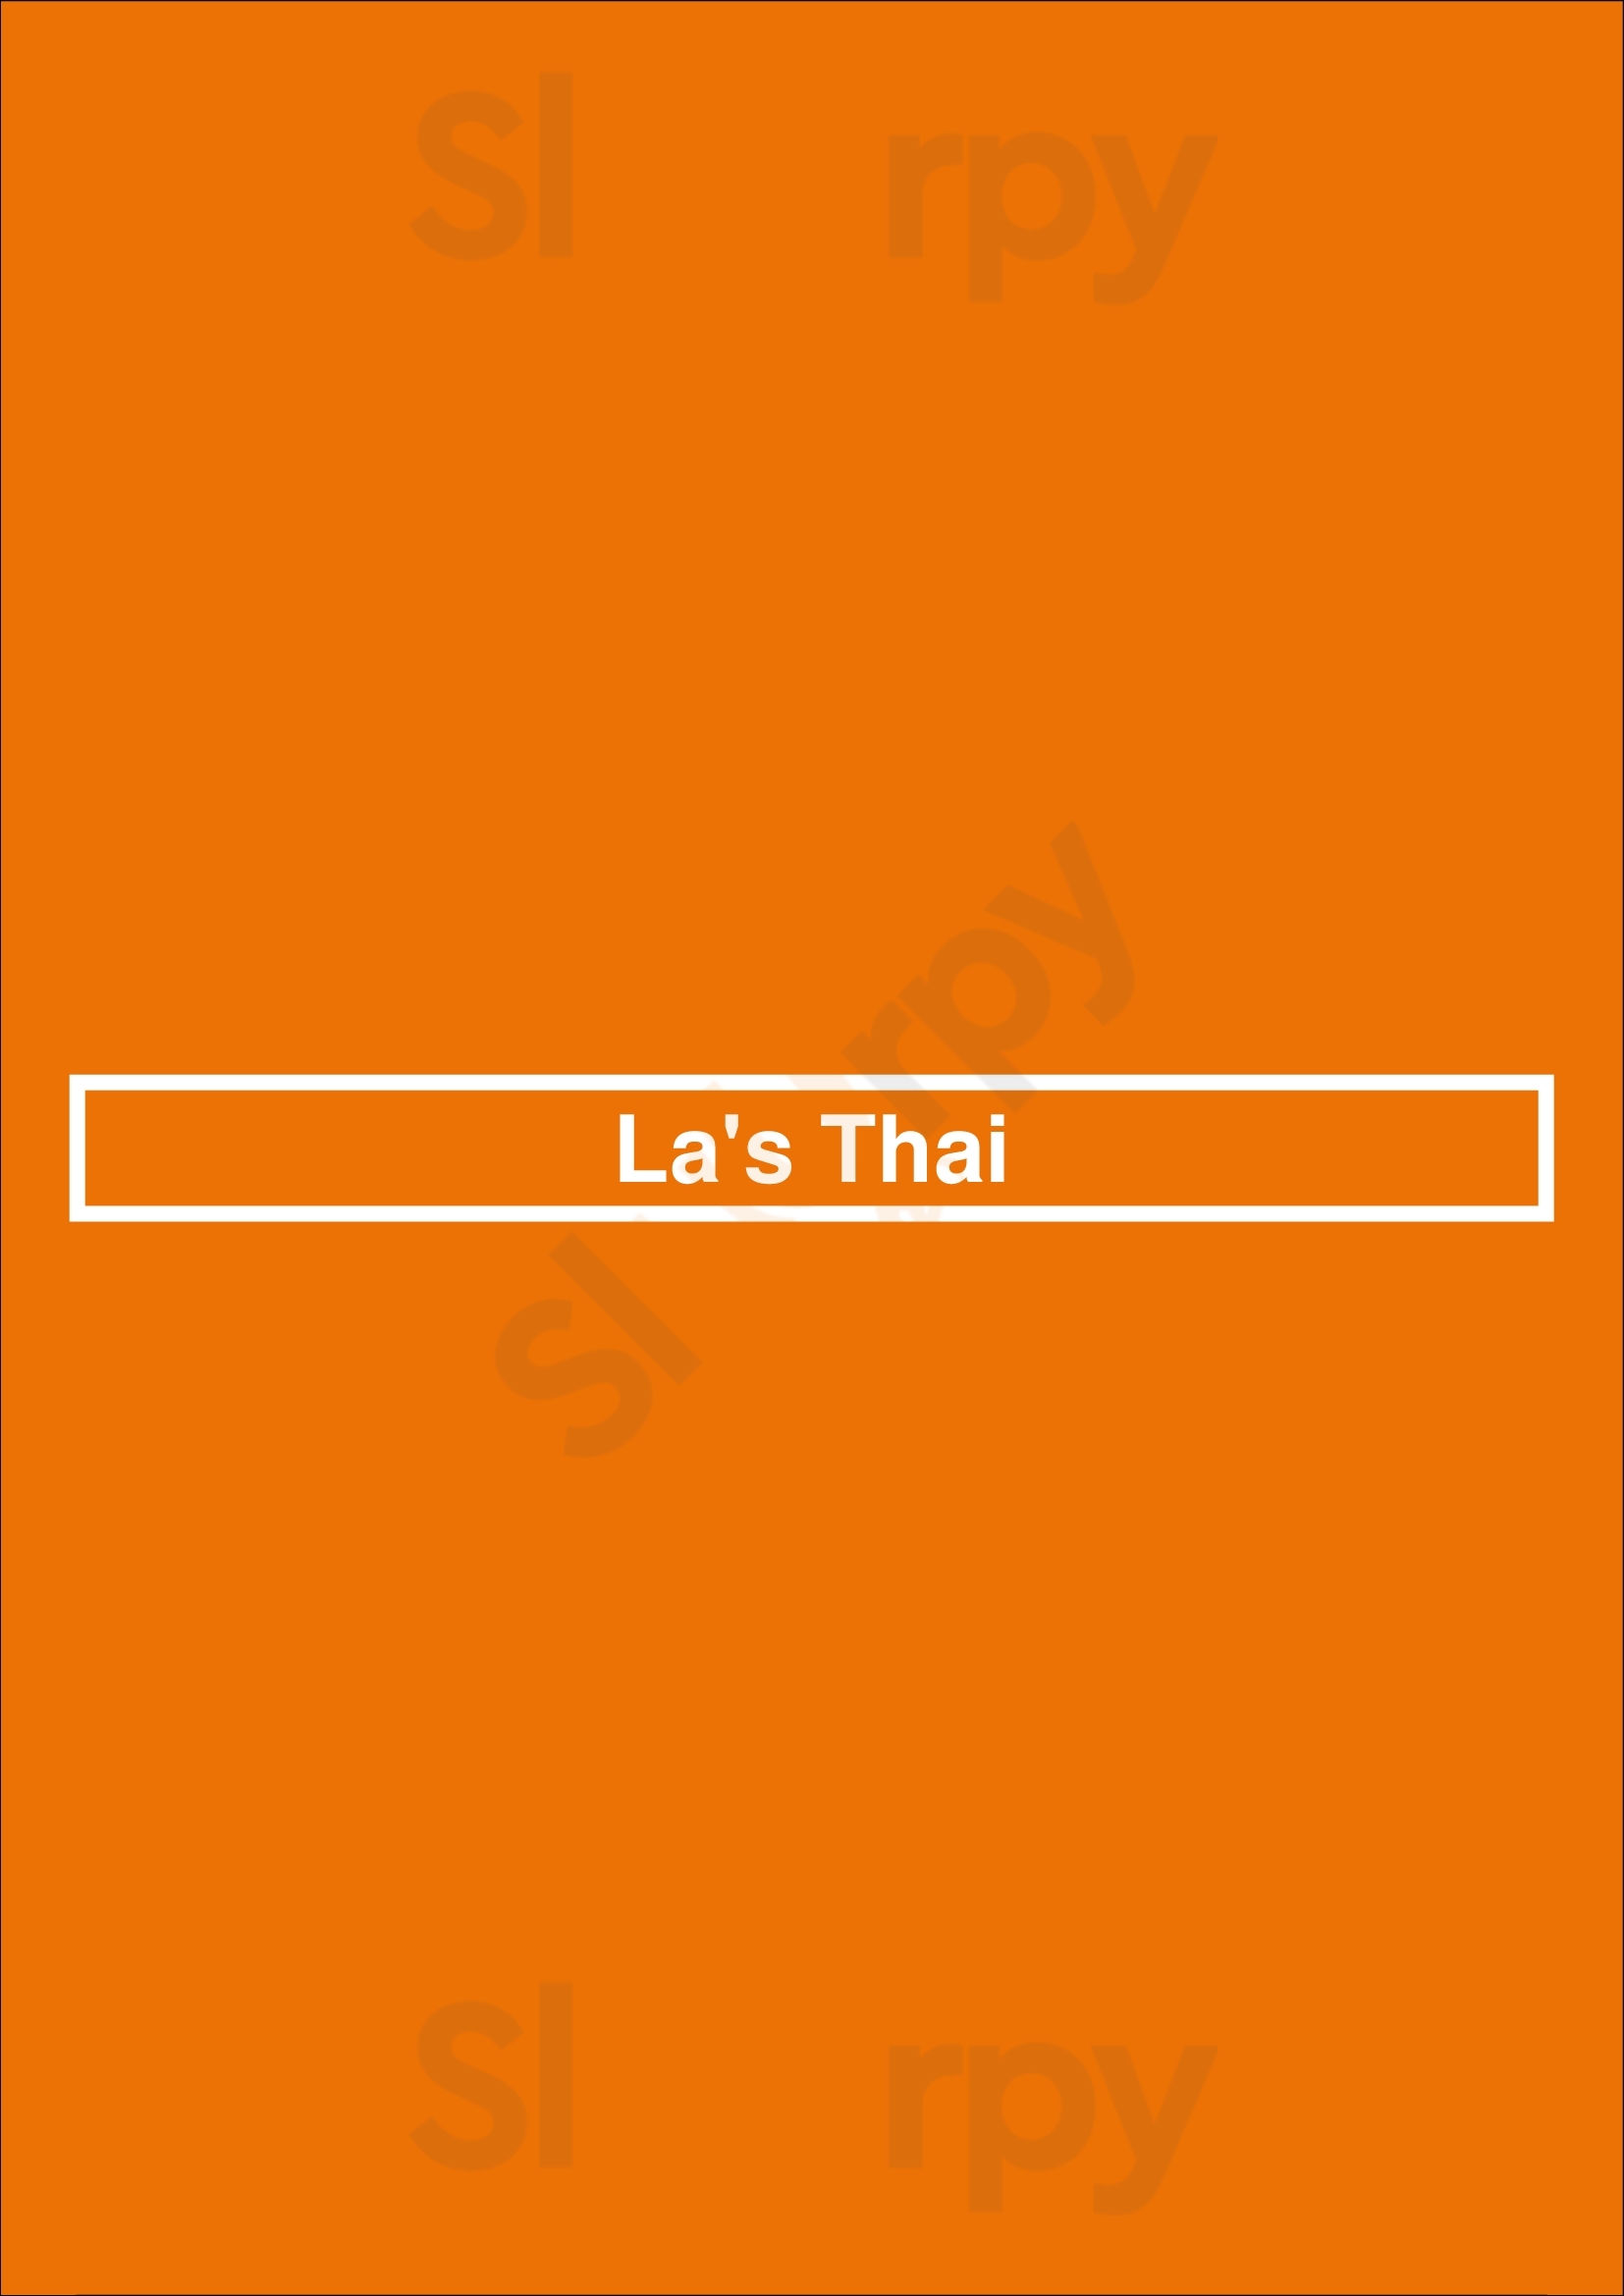 La's Thai Scottsdale Menu - 1